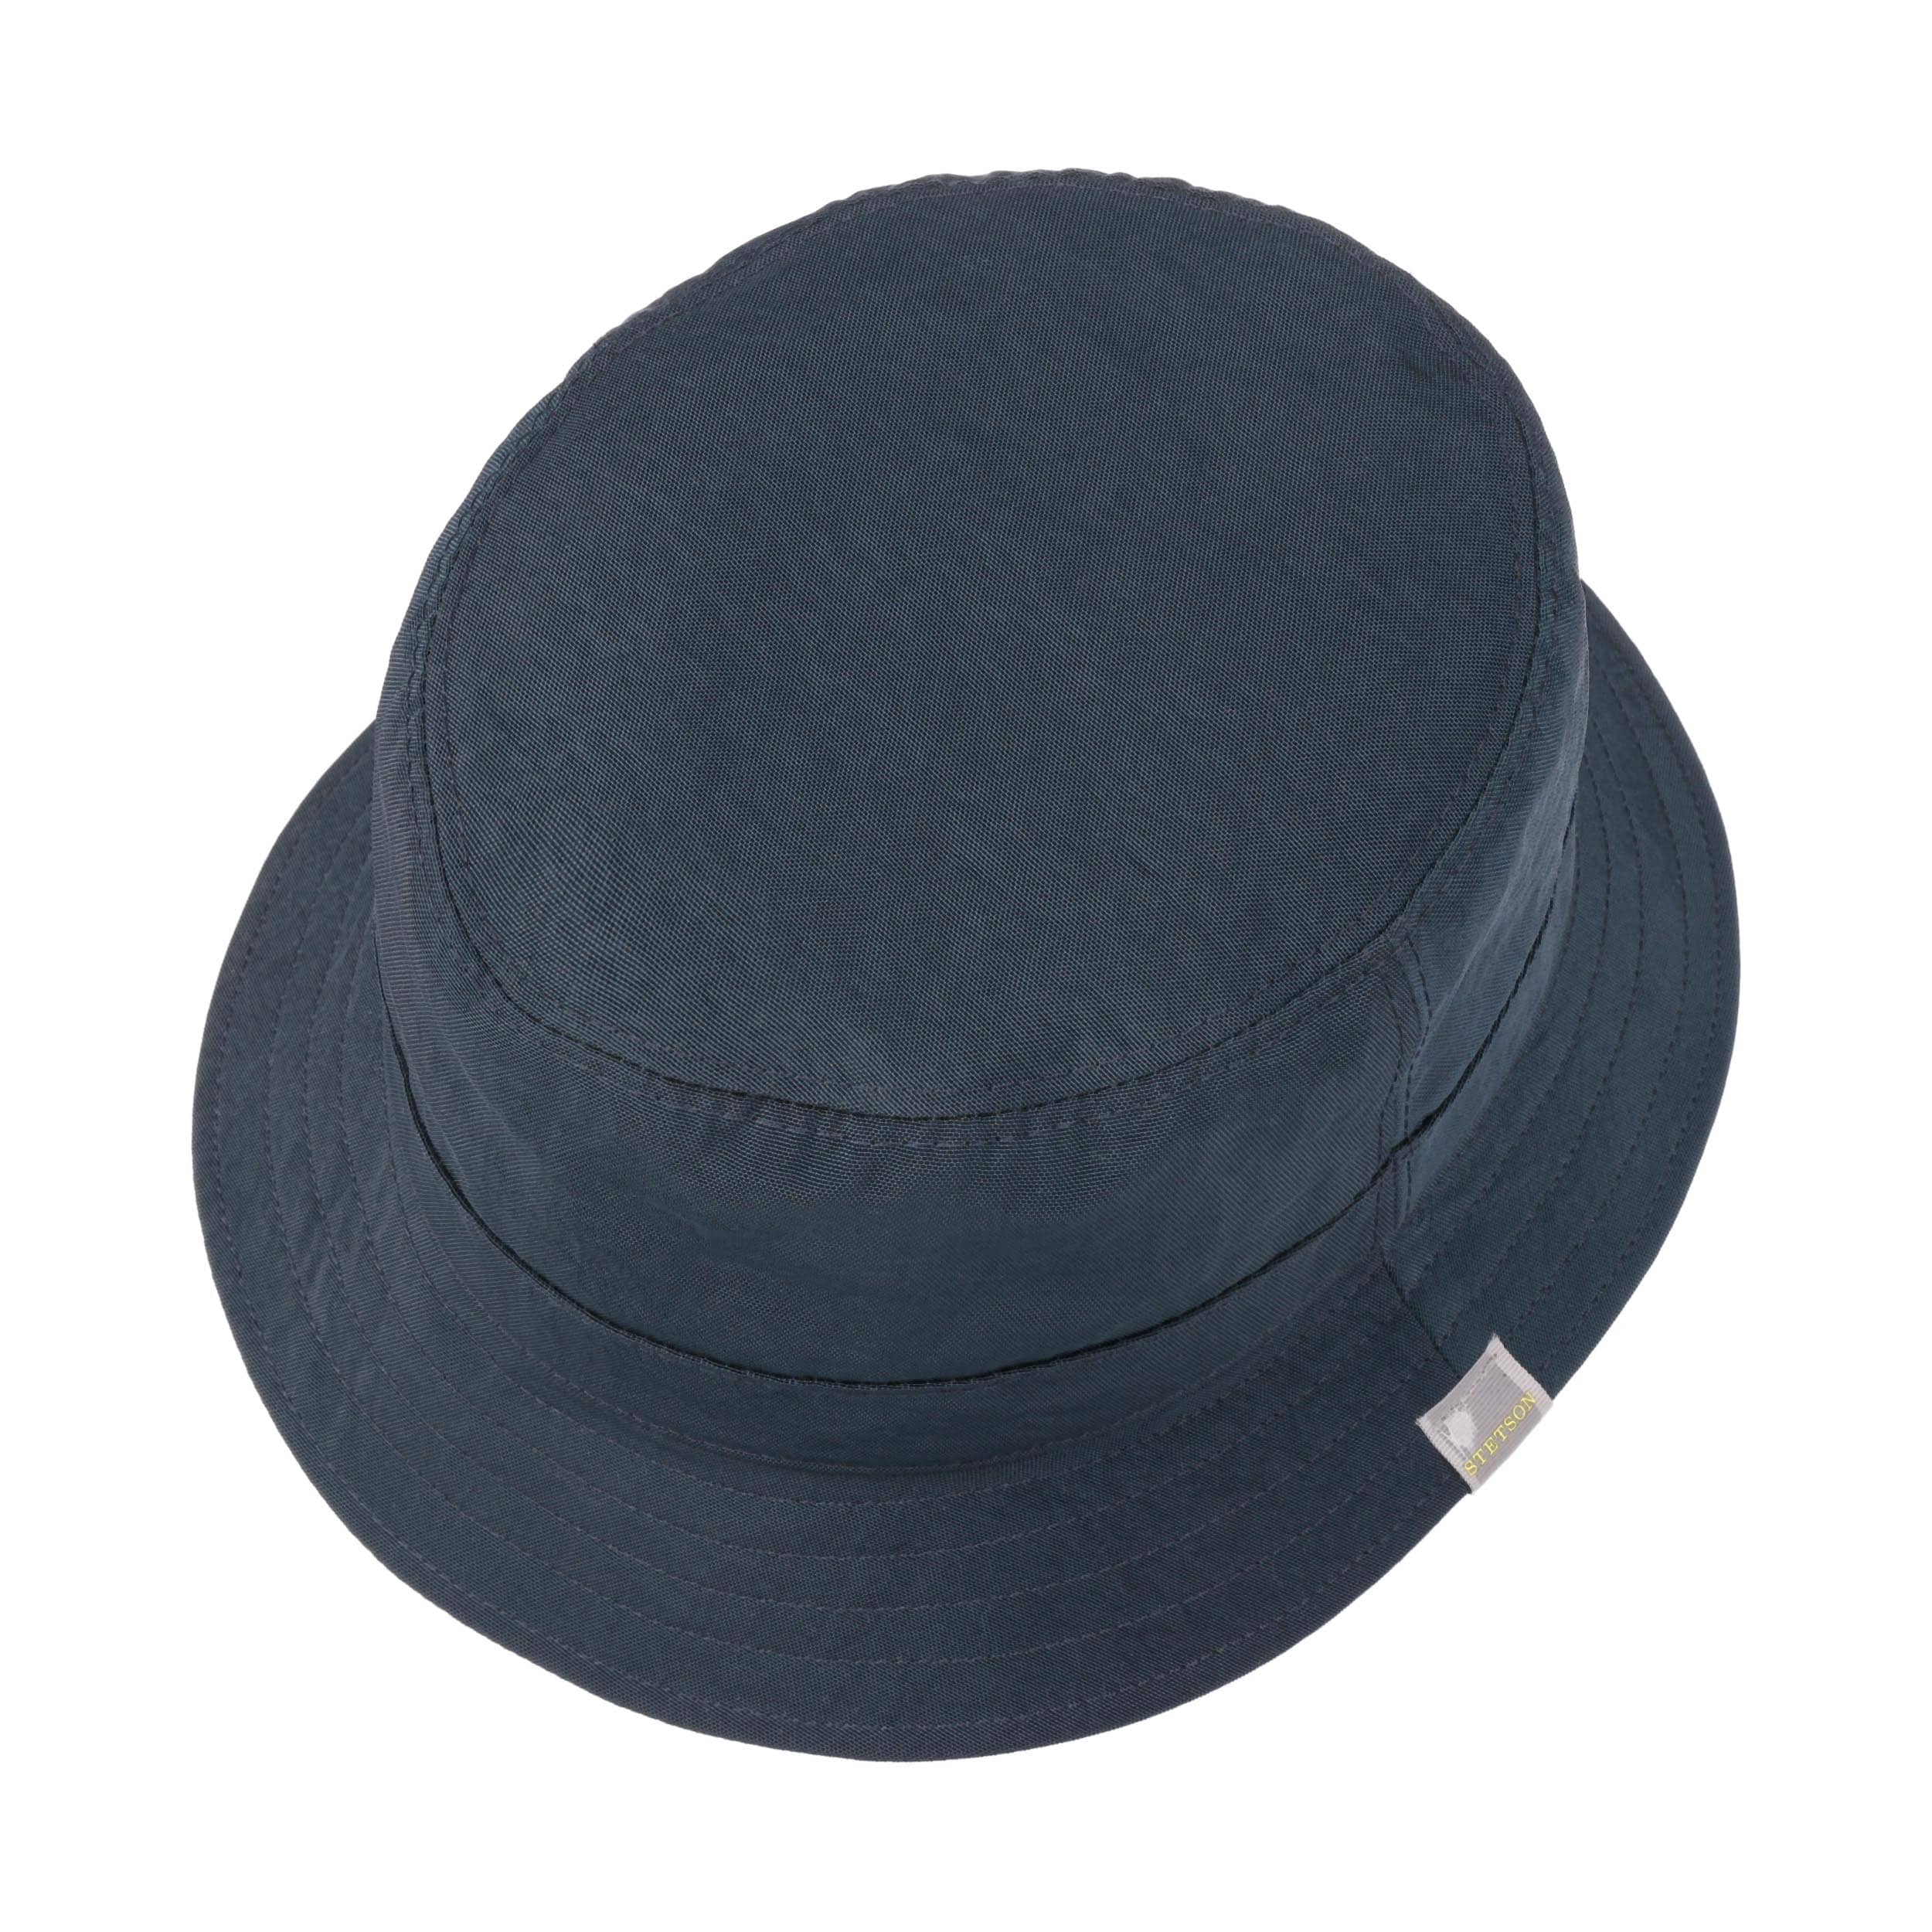 PCM Nylon Bucket Fishing Hat by Stetson - 99,00